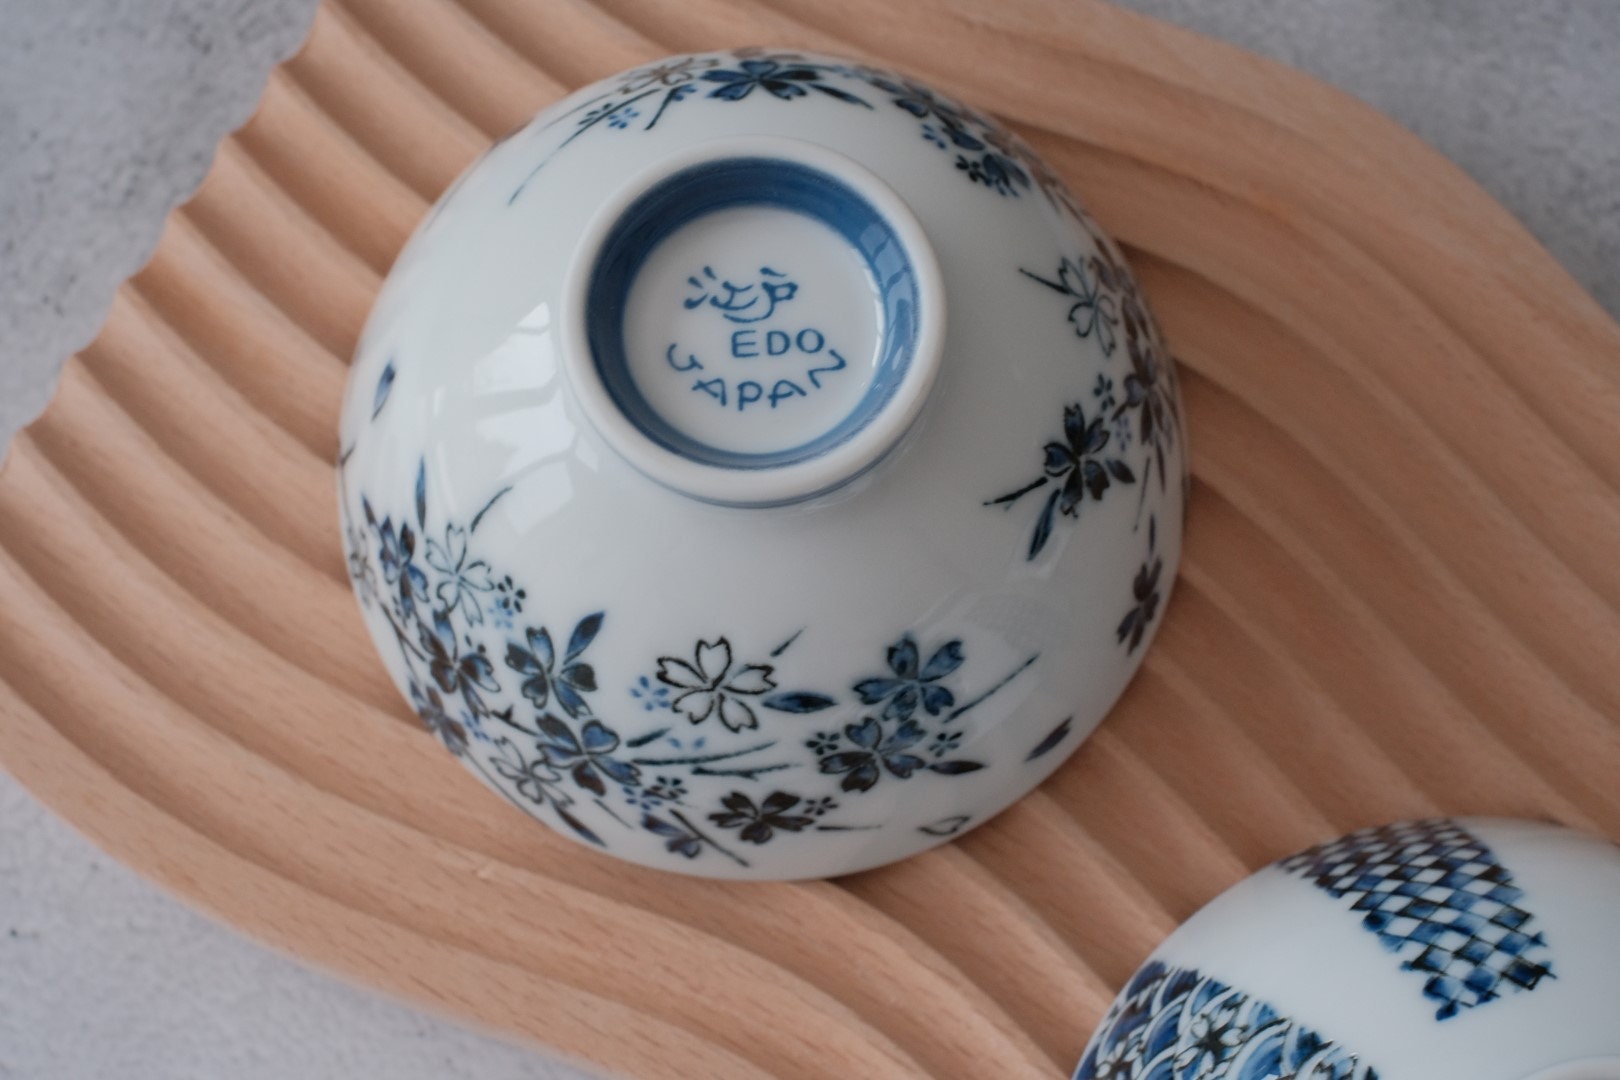 Marumon Houndstooth Bowls Gift Set Set of 5 Blue White Sometsuke Japanese Donburi Bowls with Edo Inspired Motifs Sakura Maneki Neko